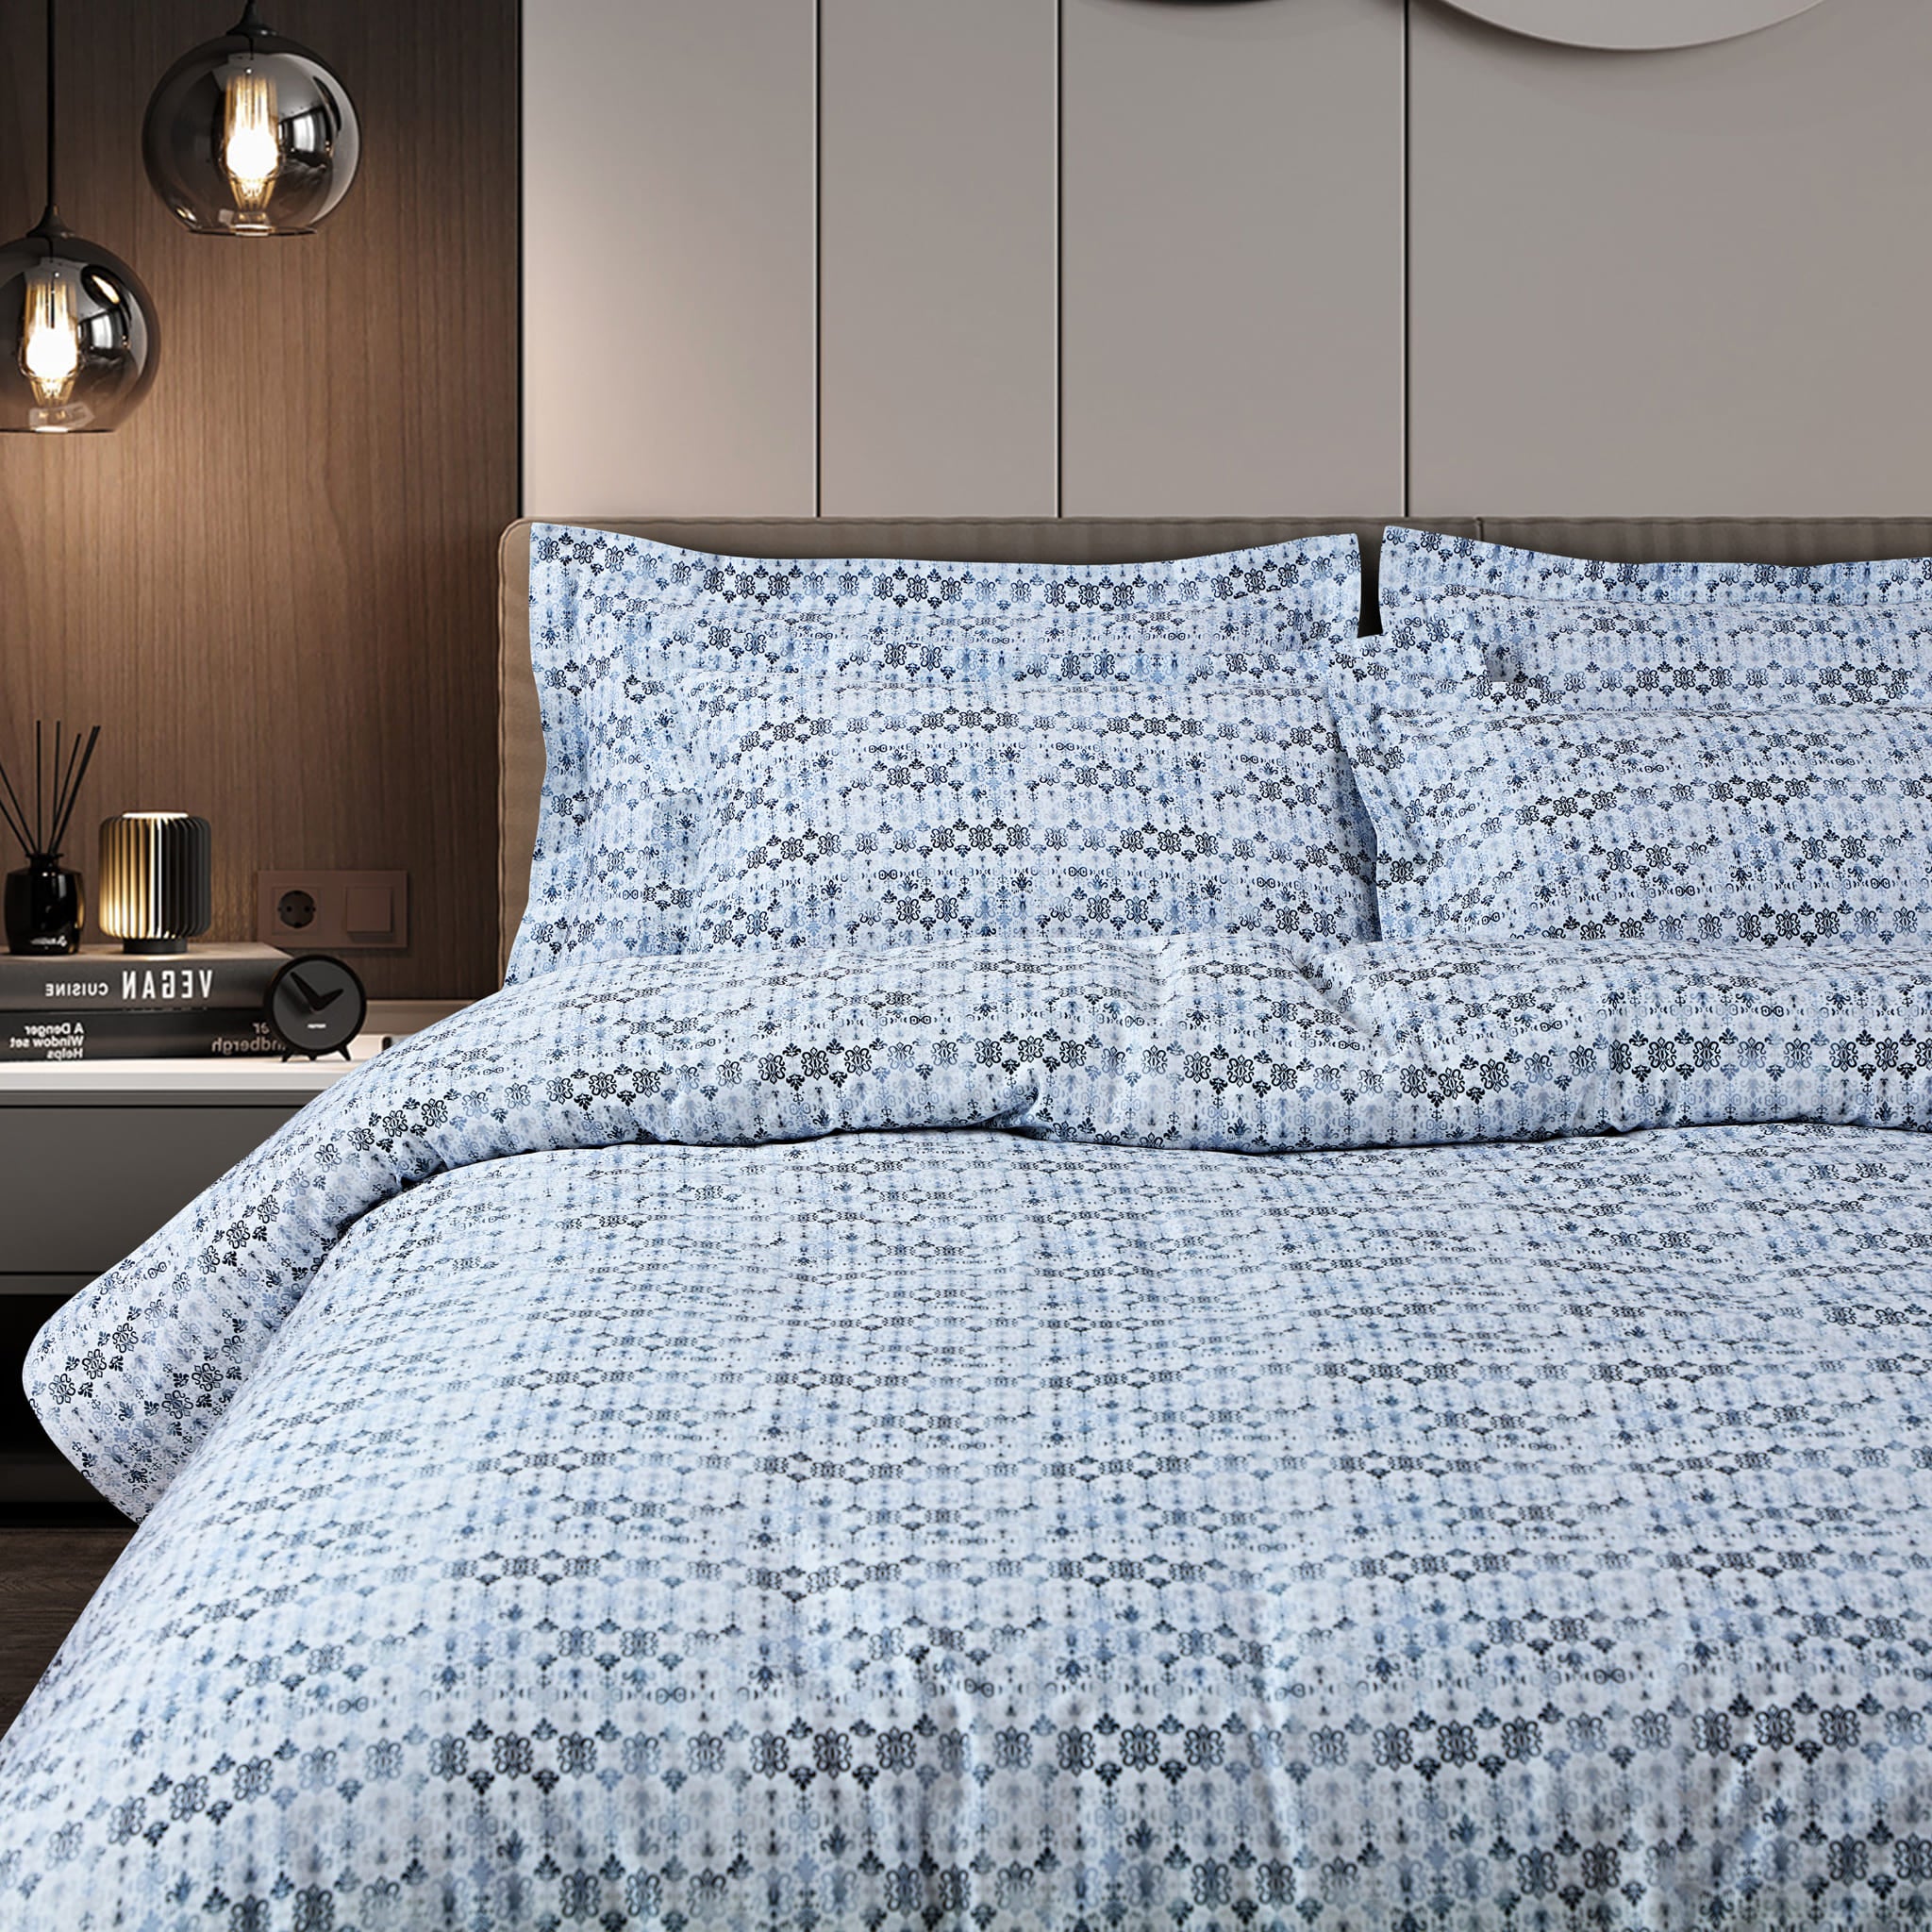 Malako Caèn White & Blue Abstract 400 TC 100% Cotton King Size Bedsheet/Duvet Cover